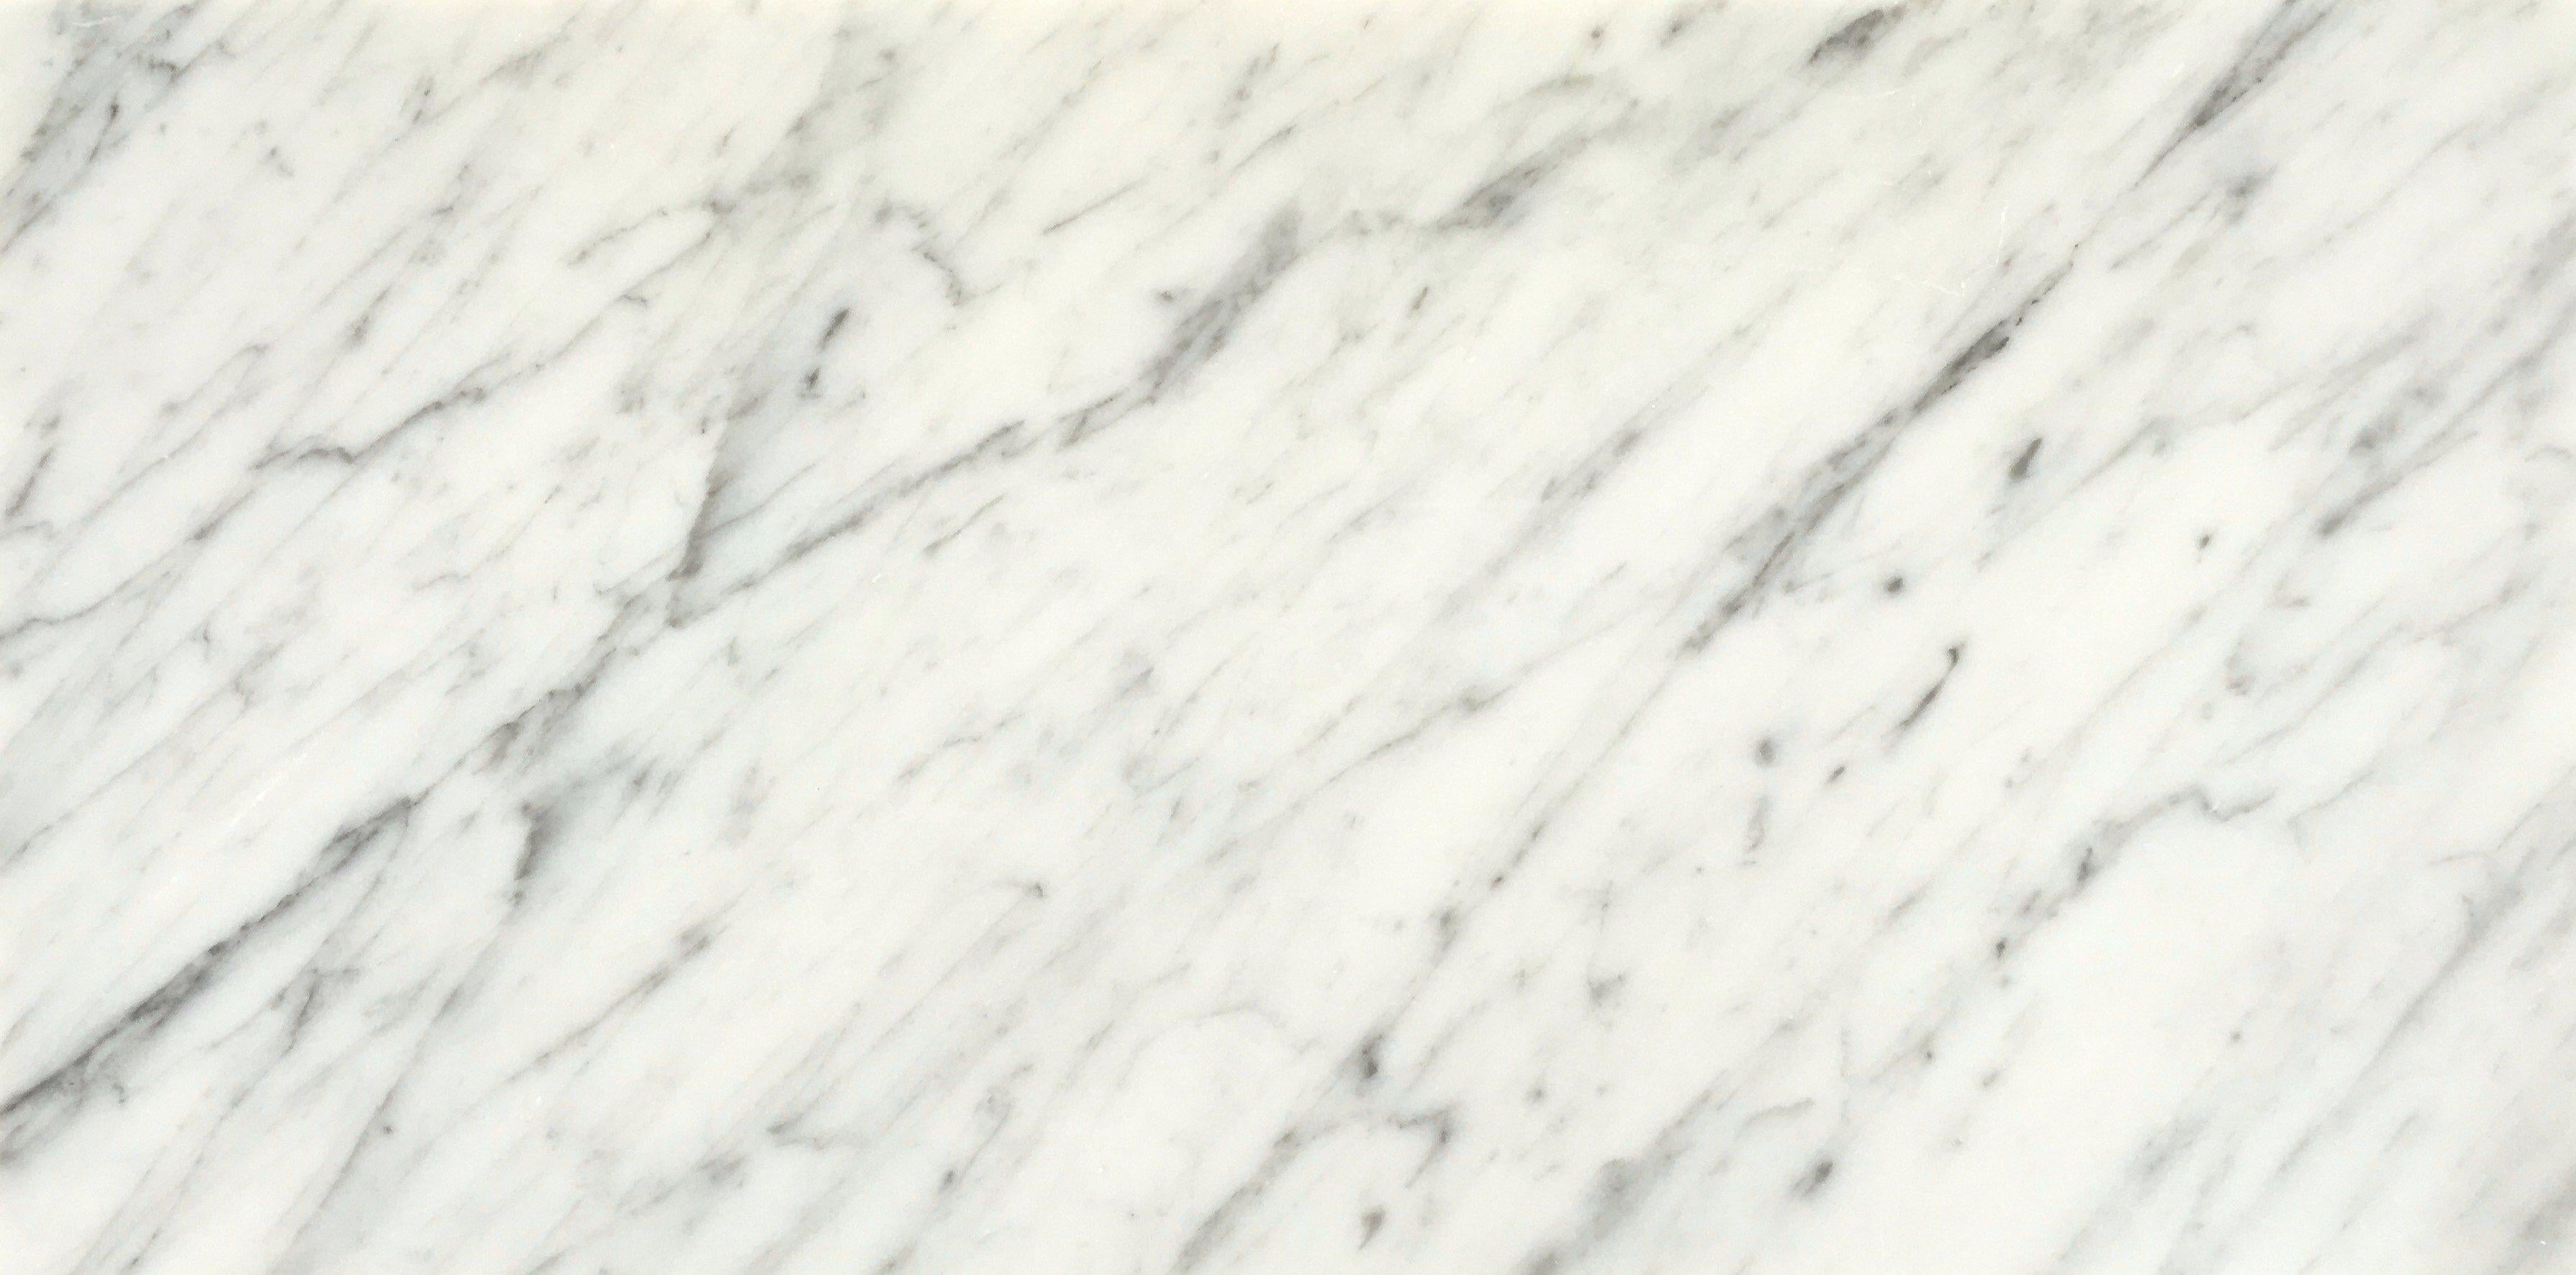 Name: ANSEATICO
Marble table designed by Adolfo Natalini
Rectangular shape size: Cm 140 x 70 x 36 H - 50 kg
Round shape size: Diam. Cm 100 x 36 H - 60 kg
Materials: White Carrara - National travertine - Black Marquina - pinkish gray
Designed by: